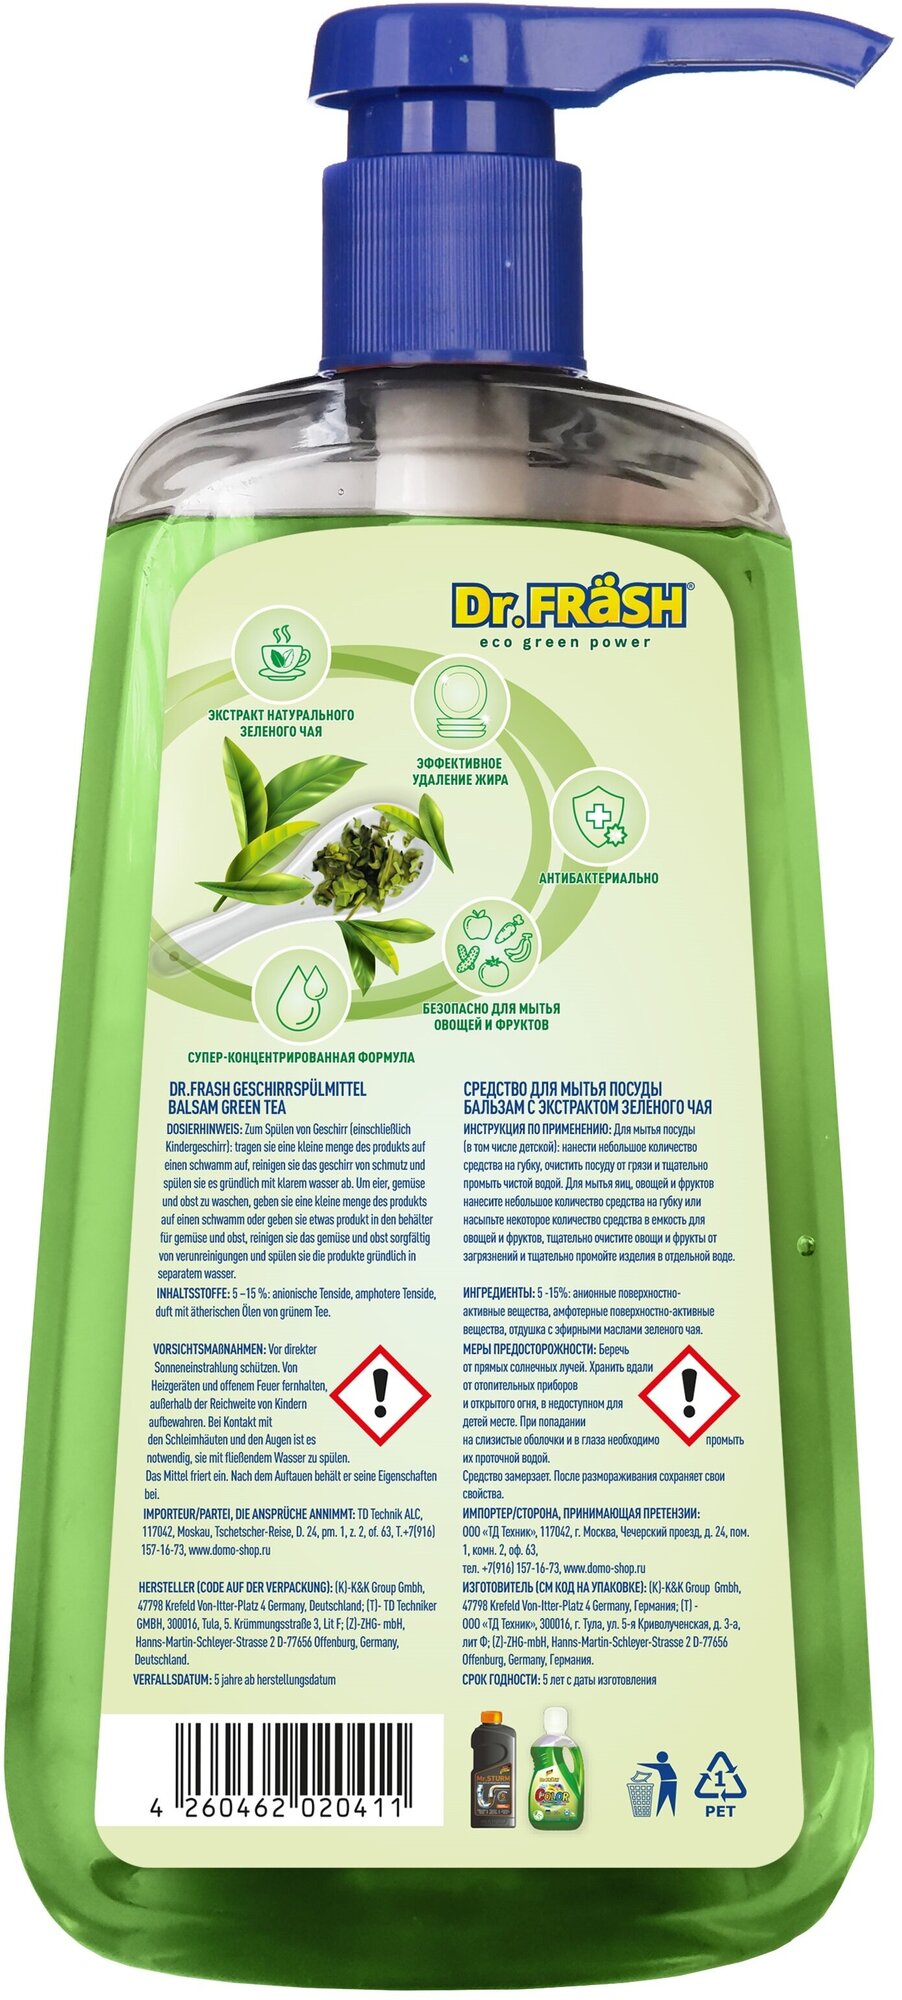 Dr.FRASH Средство для мытья посуды Бальзам Green tea, Зелёный чай, 1л